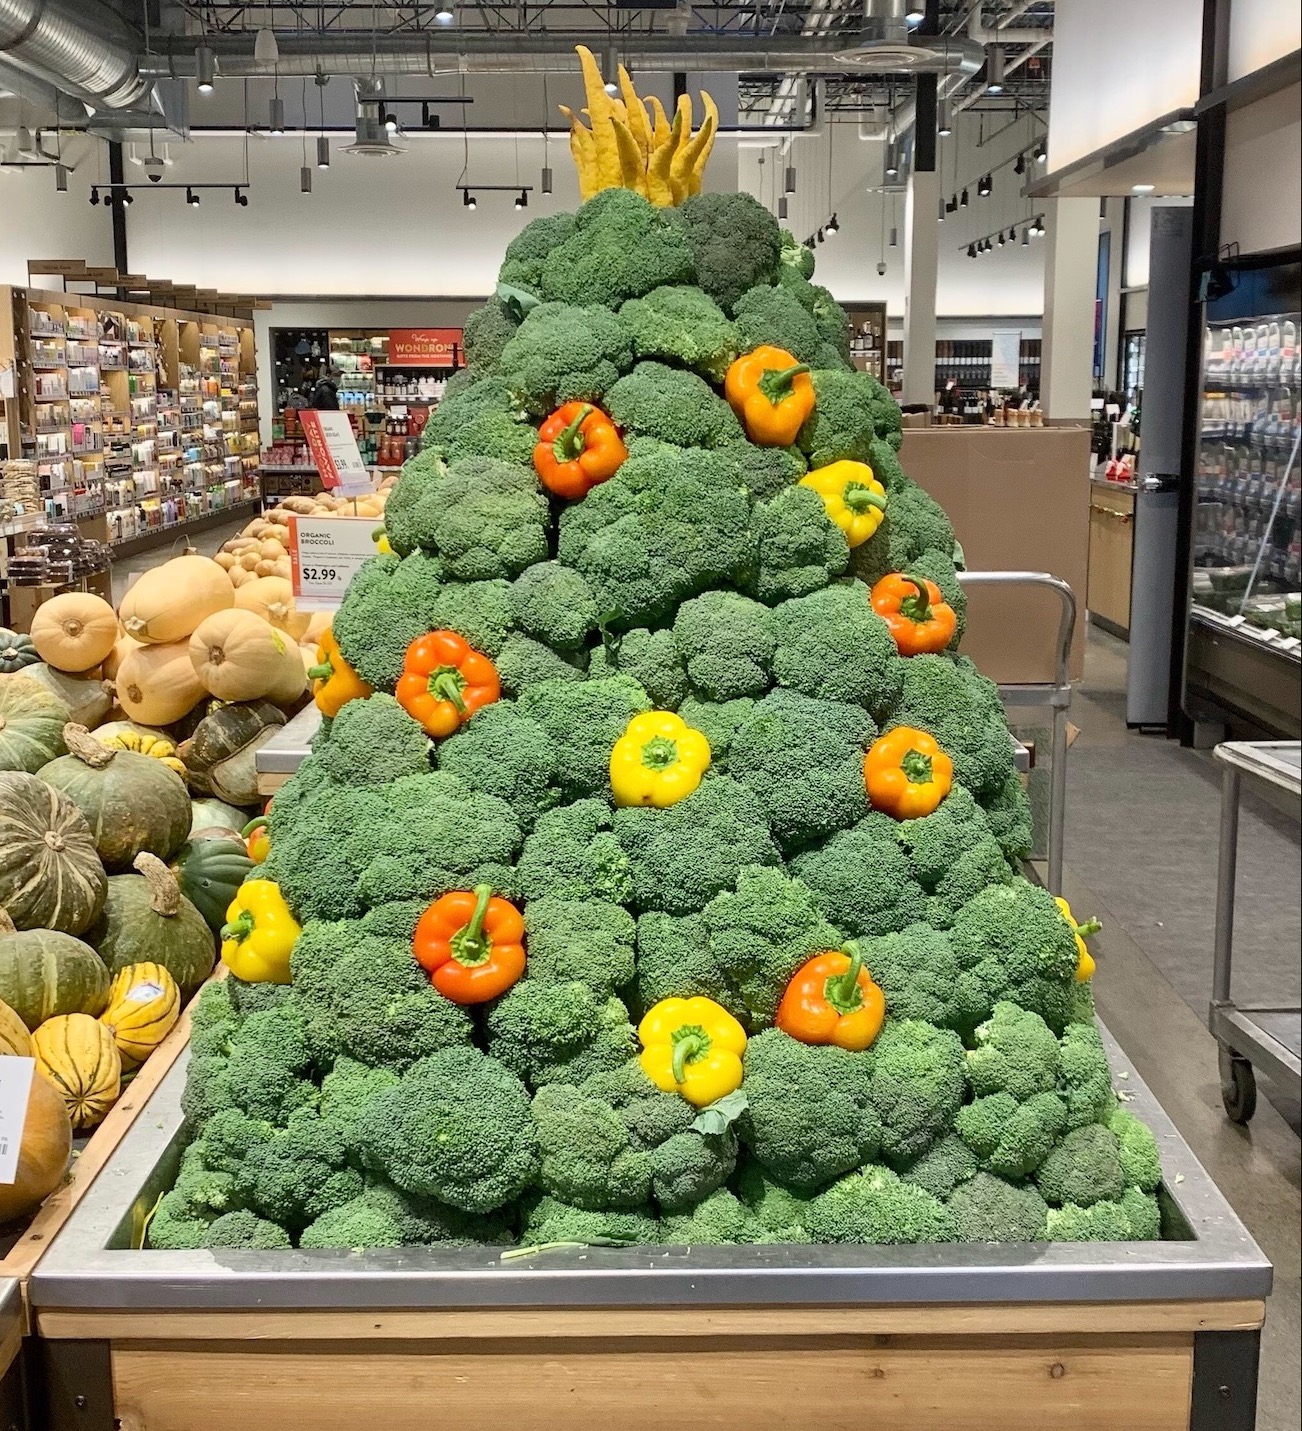  Best Broccoli/Cauliflower Display, second place: Elliot Lamoureux of PCC Community Markets-Ballard, Seattle, Wash.